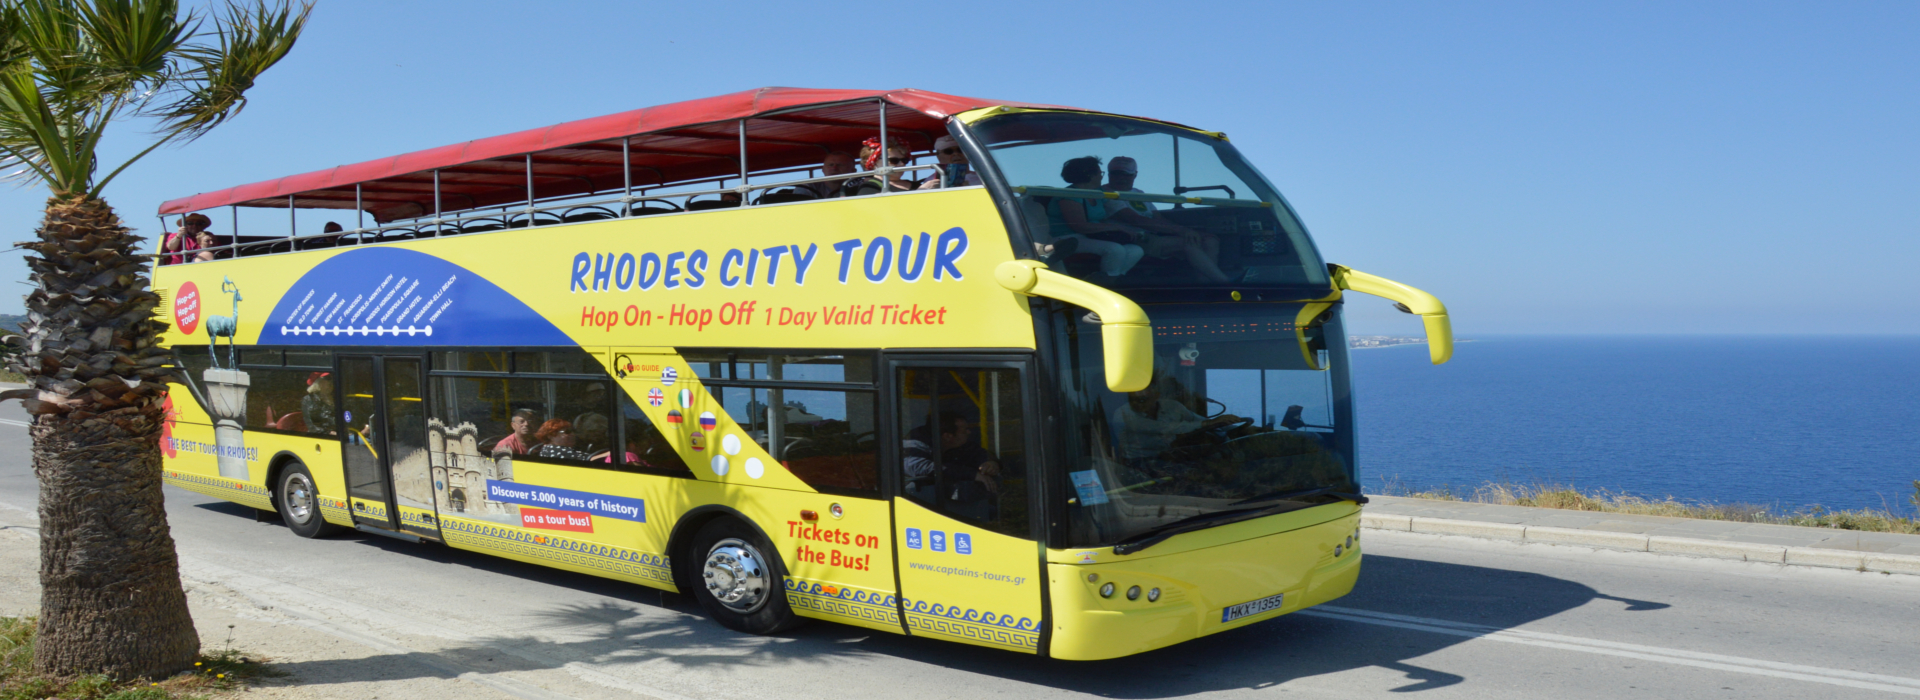 Prohlídka Rhodos s otevřeným autobusem, OpenBus | Captains Tours